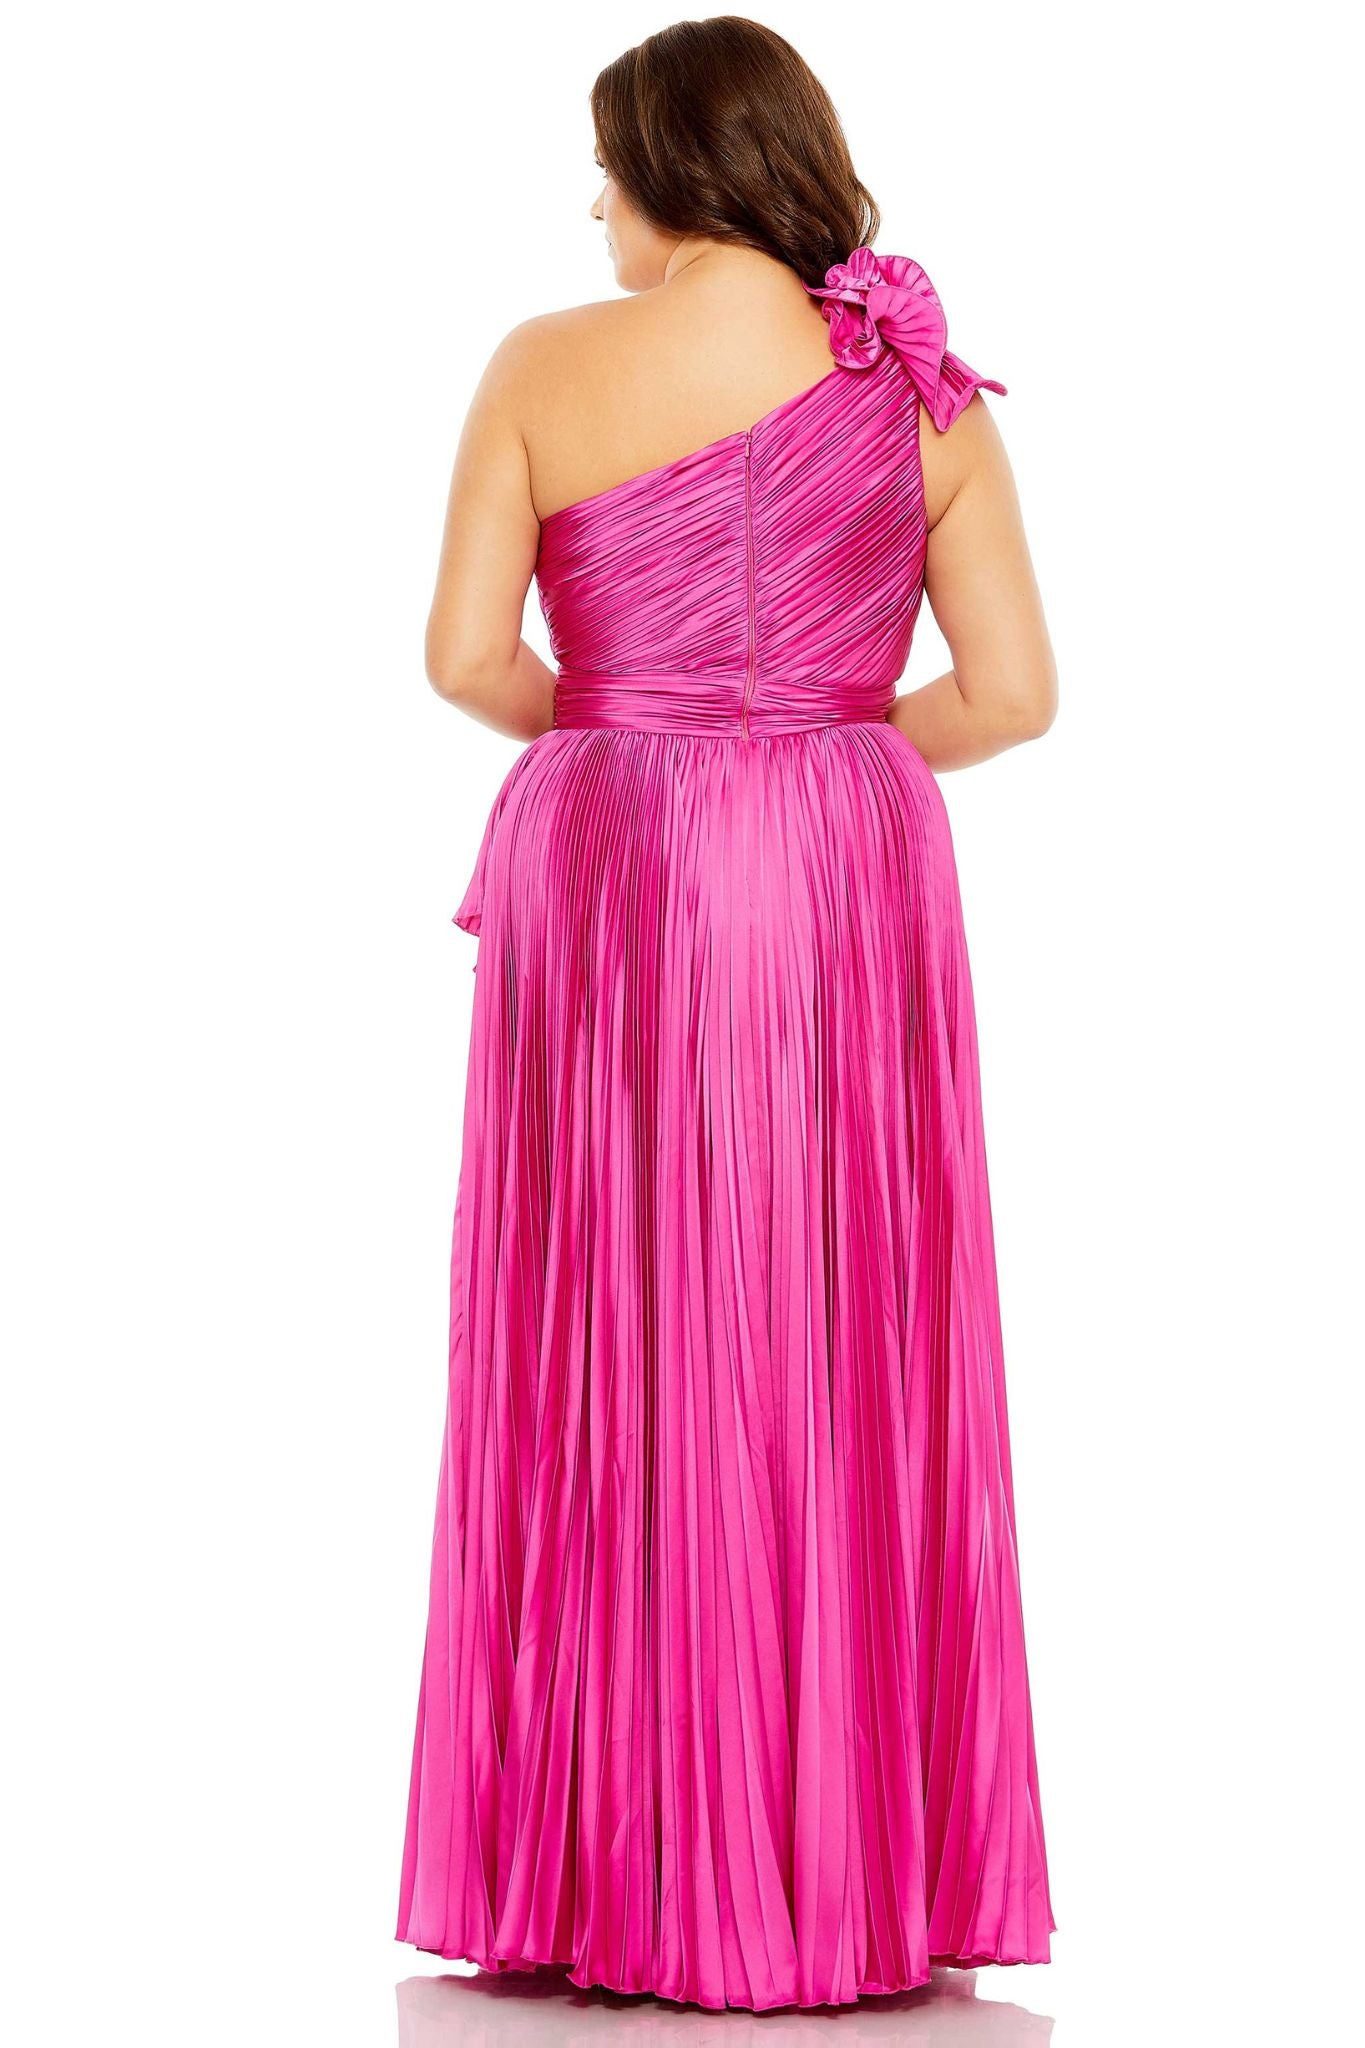 Amara One-Shoulder Gown in Hot Pink by Mac Duggal - RENTAL